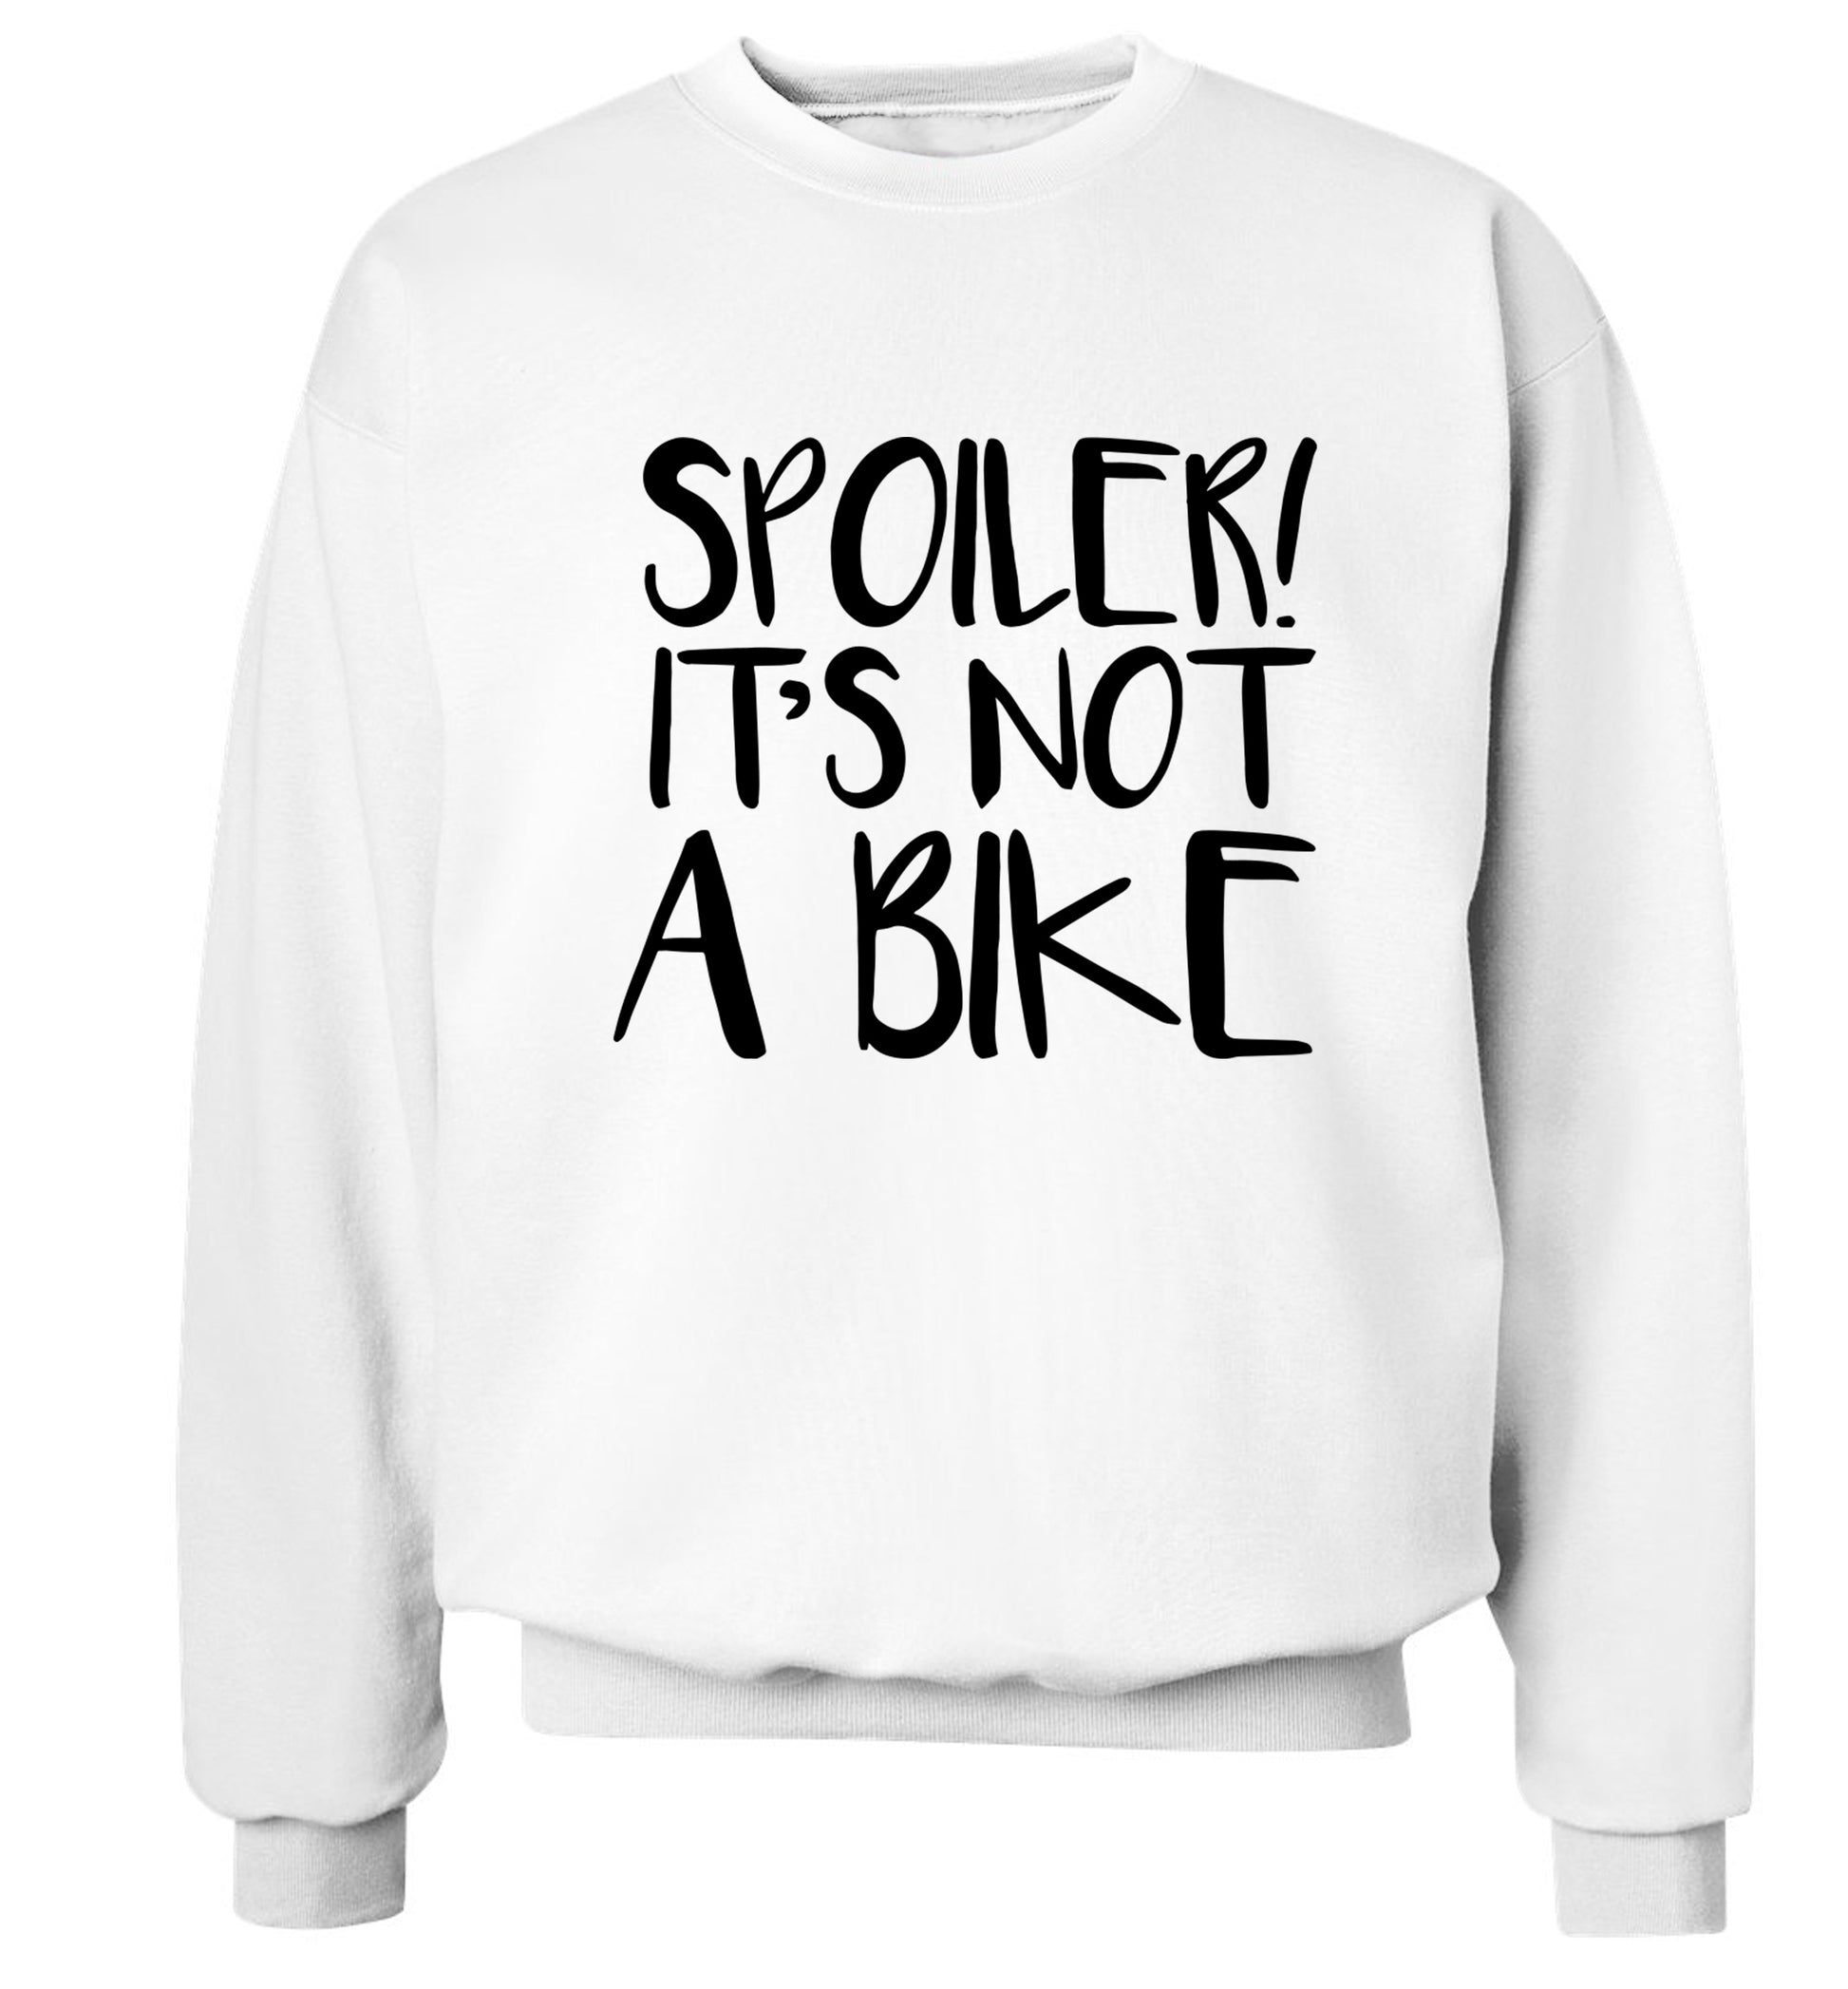 Spoiler it's not a bike Adult's unisex white Sweater 2XL